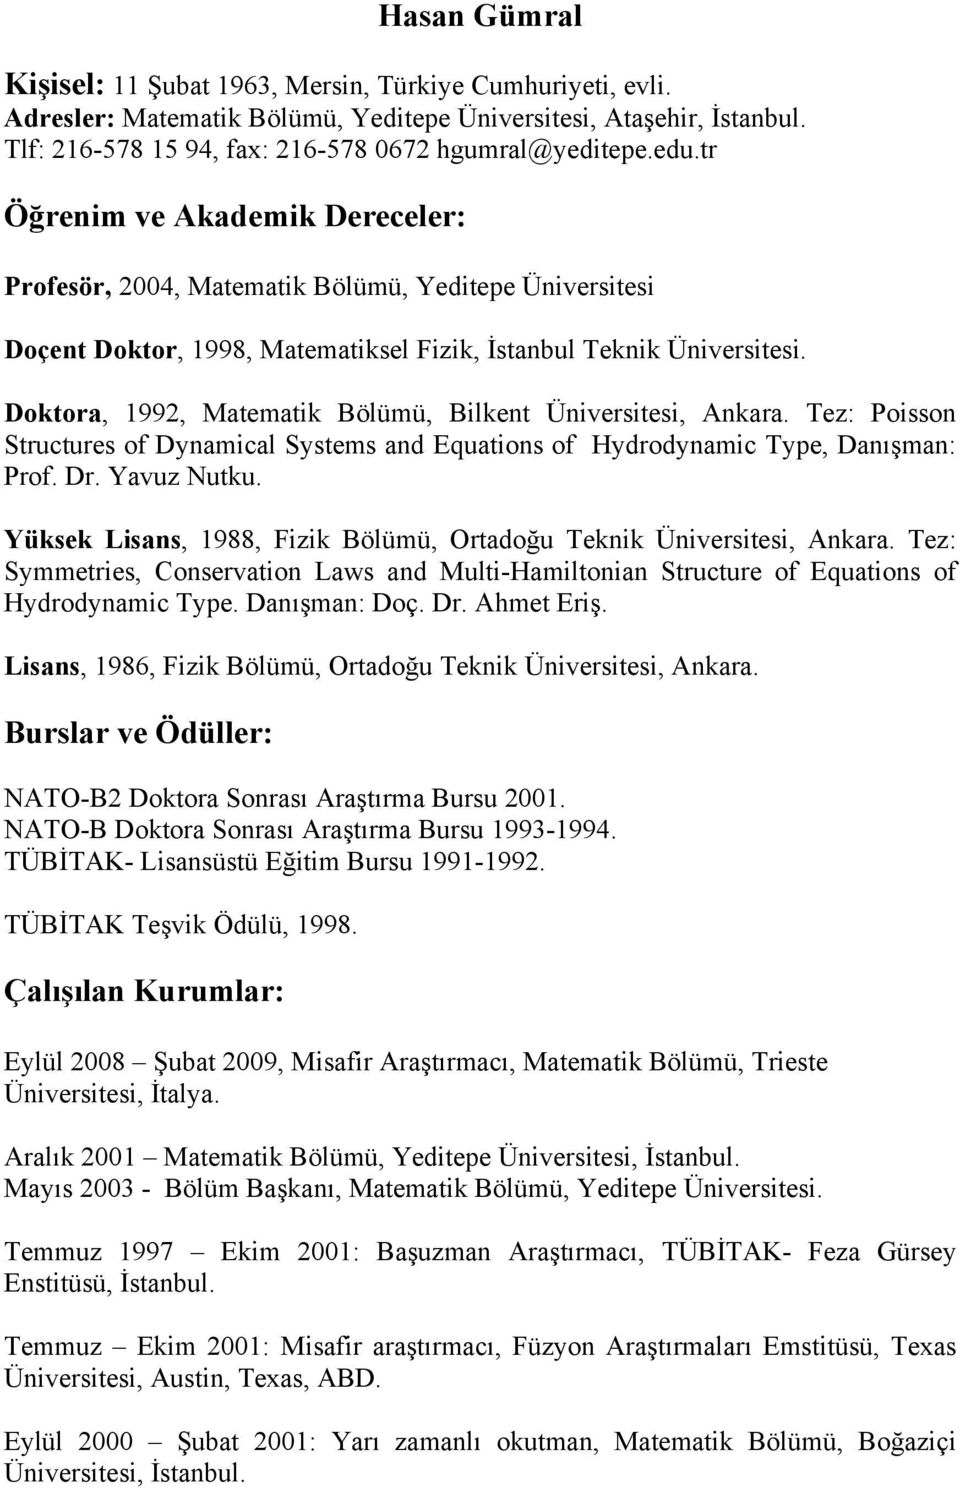 Doktora, 1992, Matematik Bölümü, Bilkent Üniversitesi, Ankara. Tez: Poisson Structures of Dynamical Systems and Equations of Hydrodynamic Type, Danışman: Prof. Dr. Yavuz Nutku.